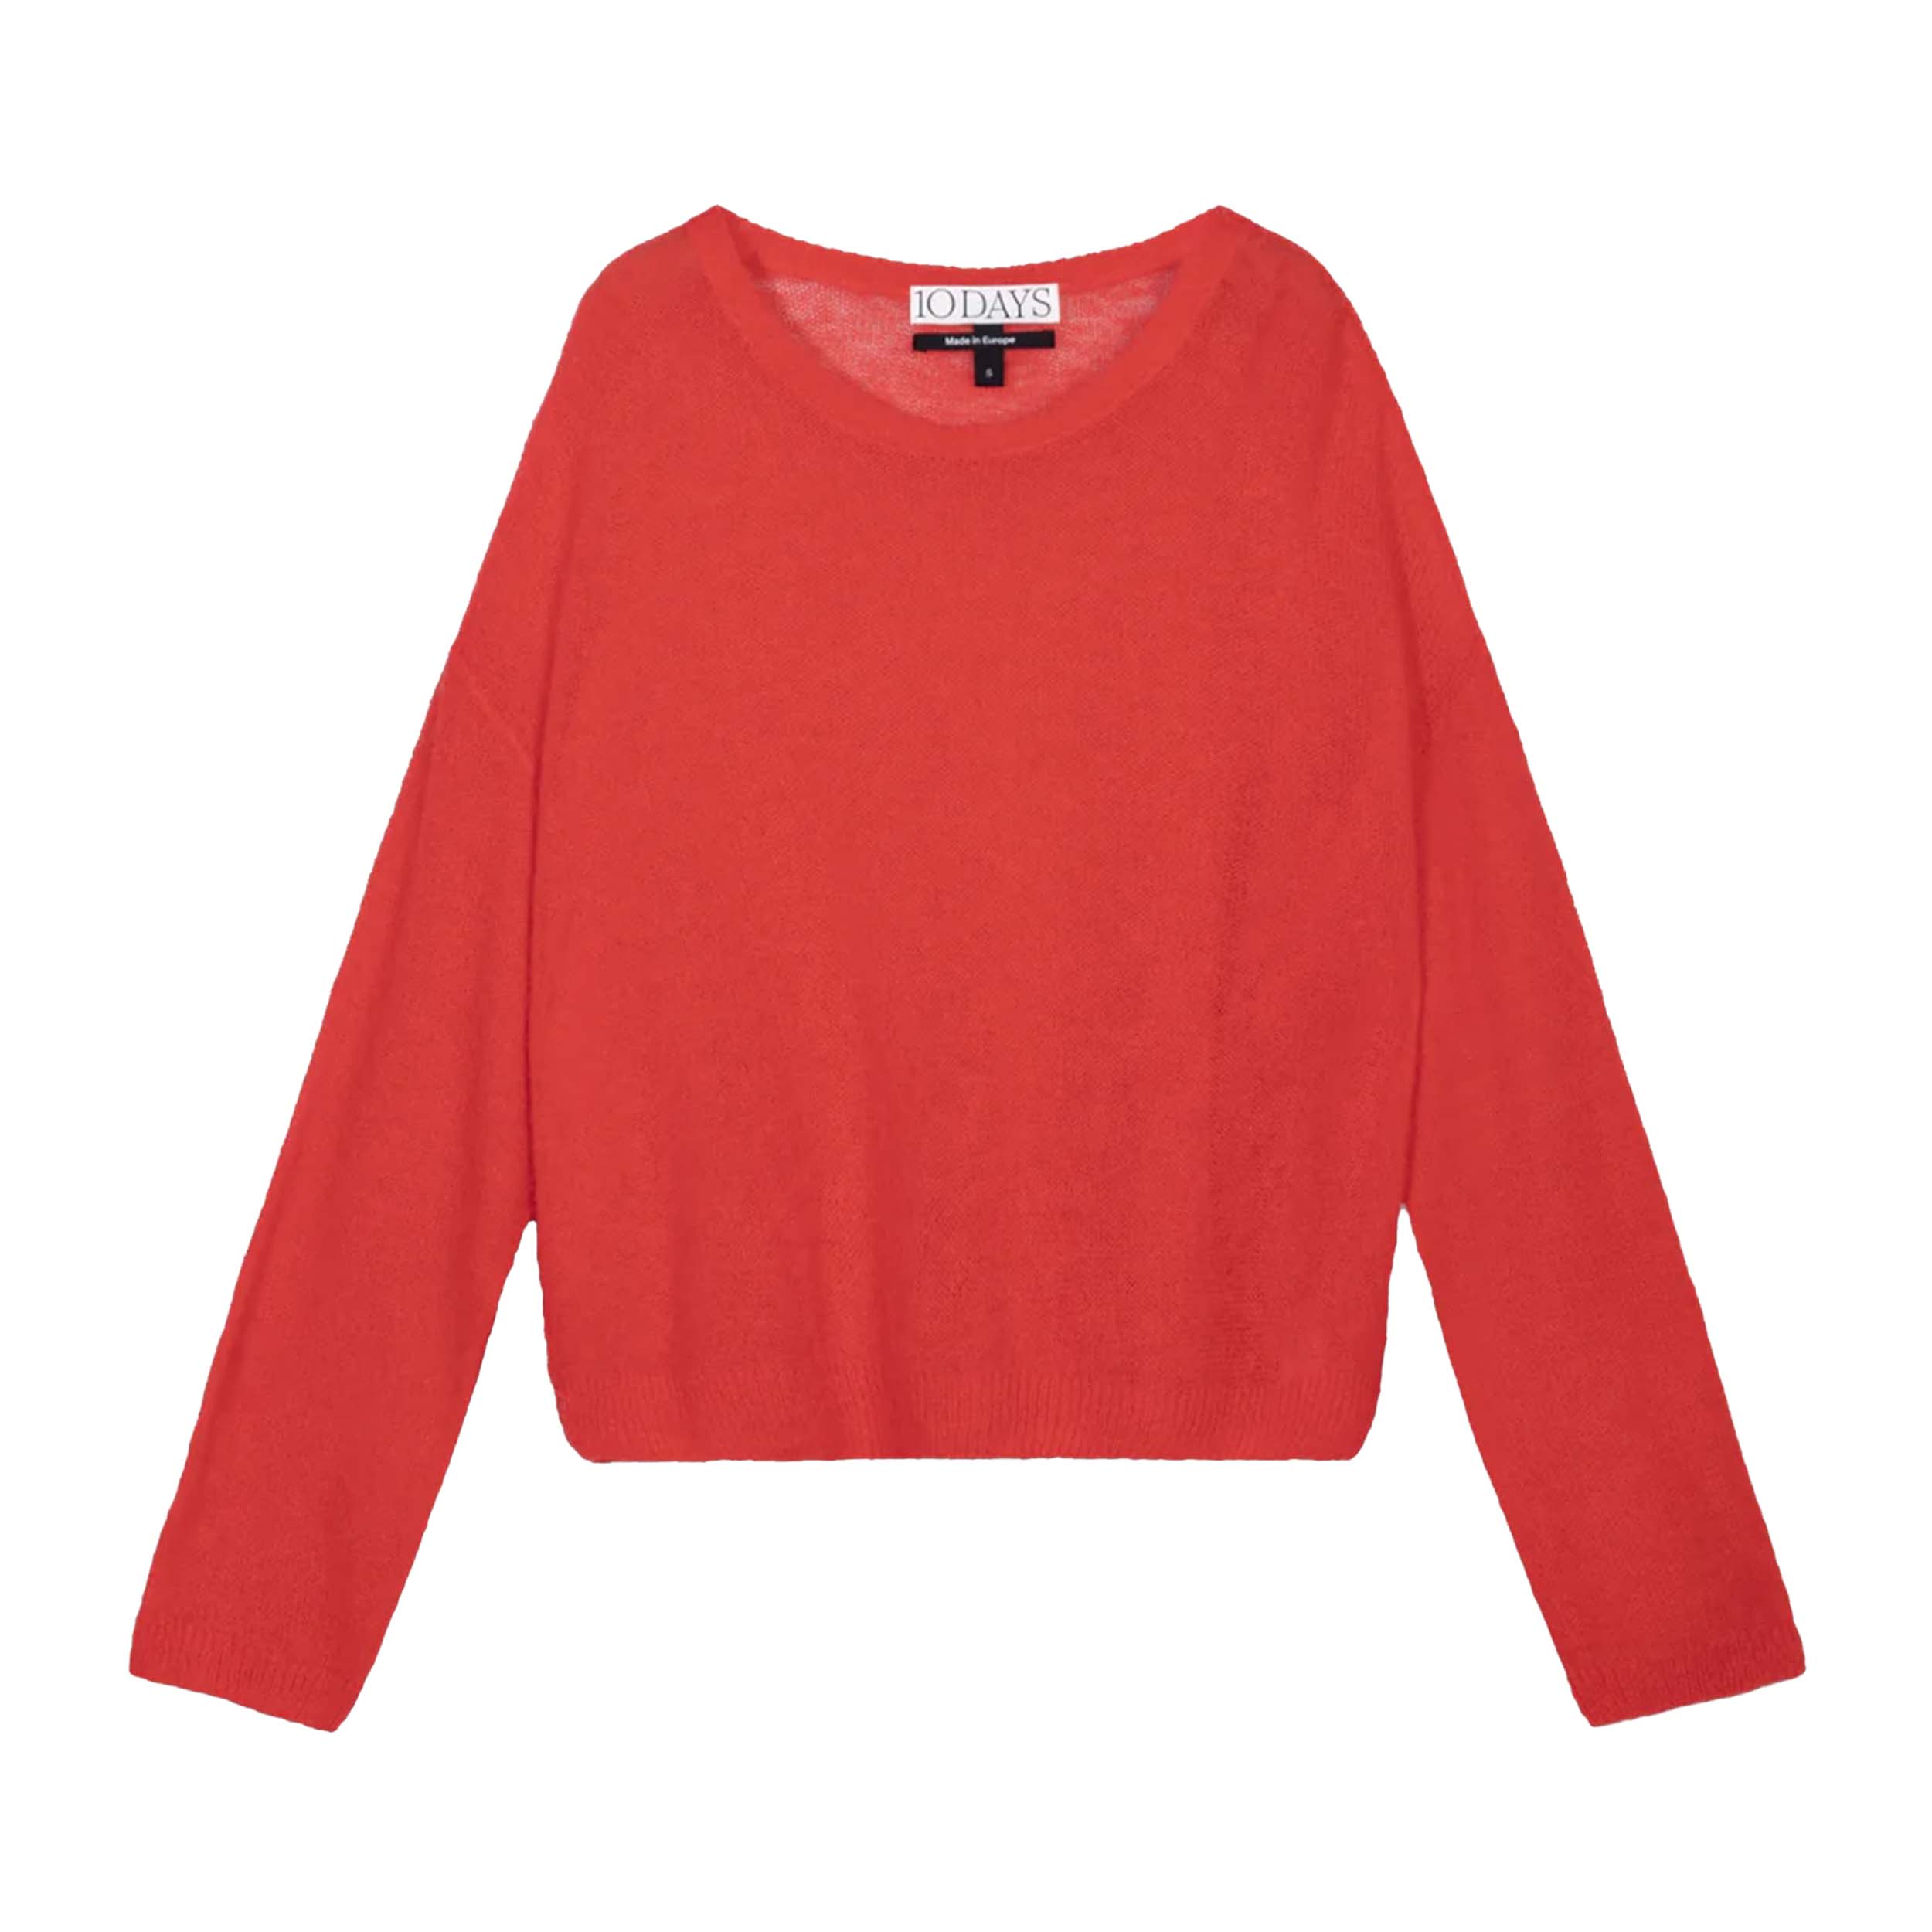 10DAYS Sweater Thin Knit Poppy Red